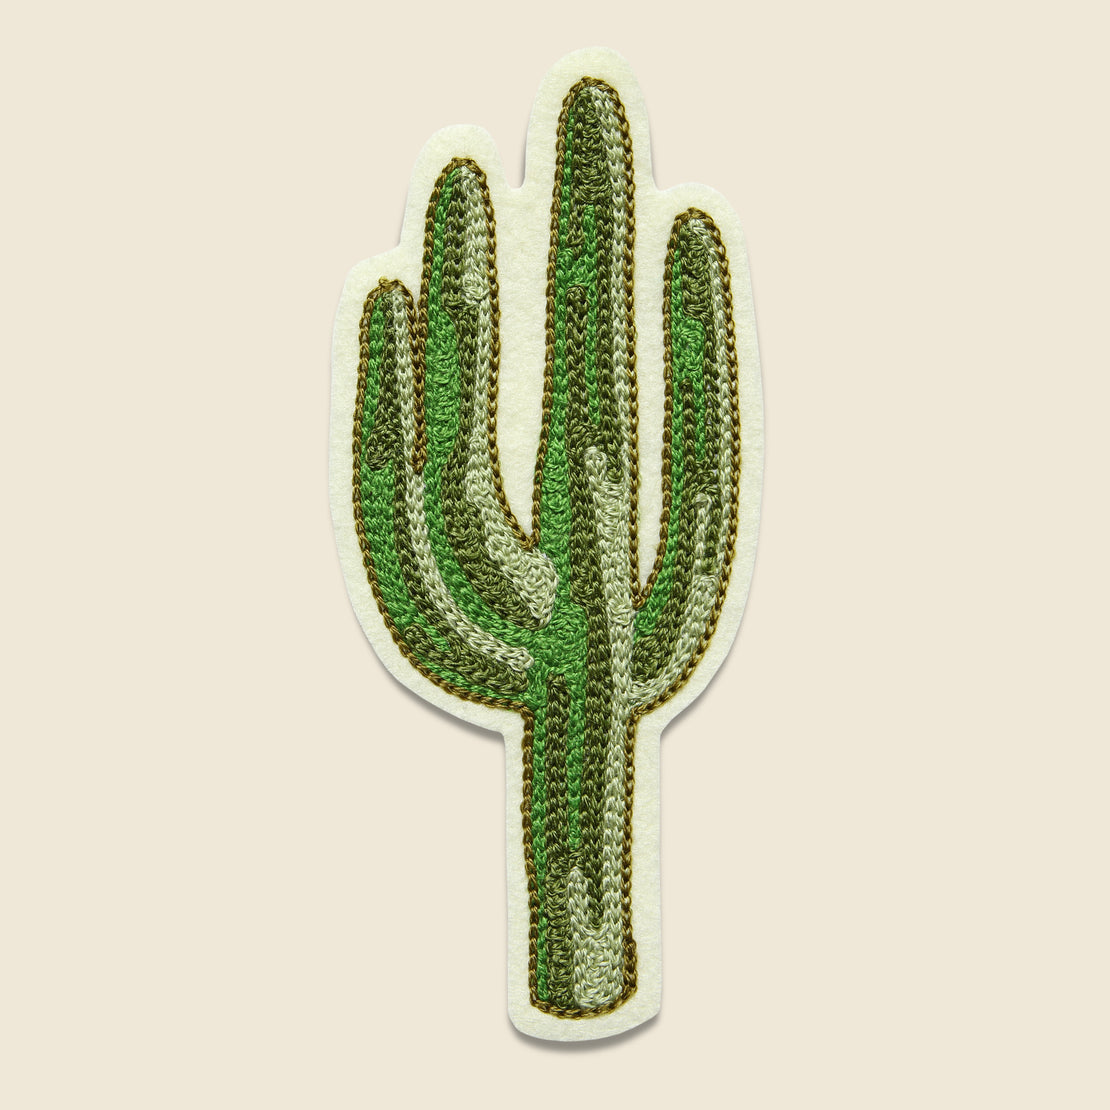 Fort Lonesome Patch - Saguaro Cactus